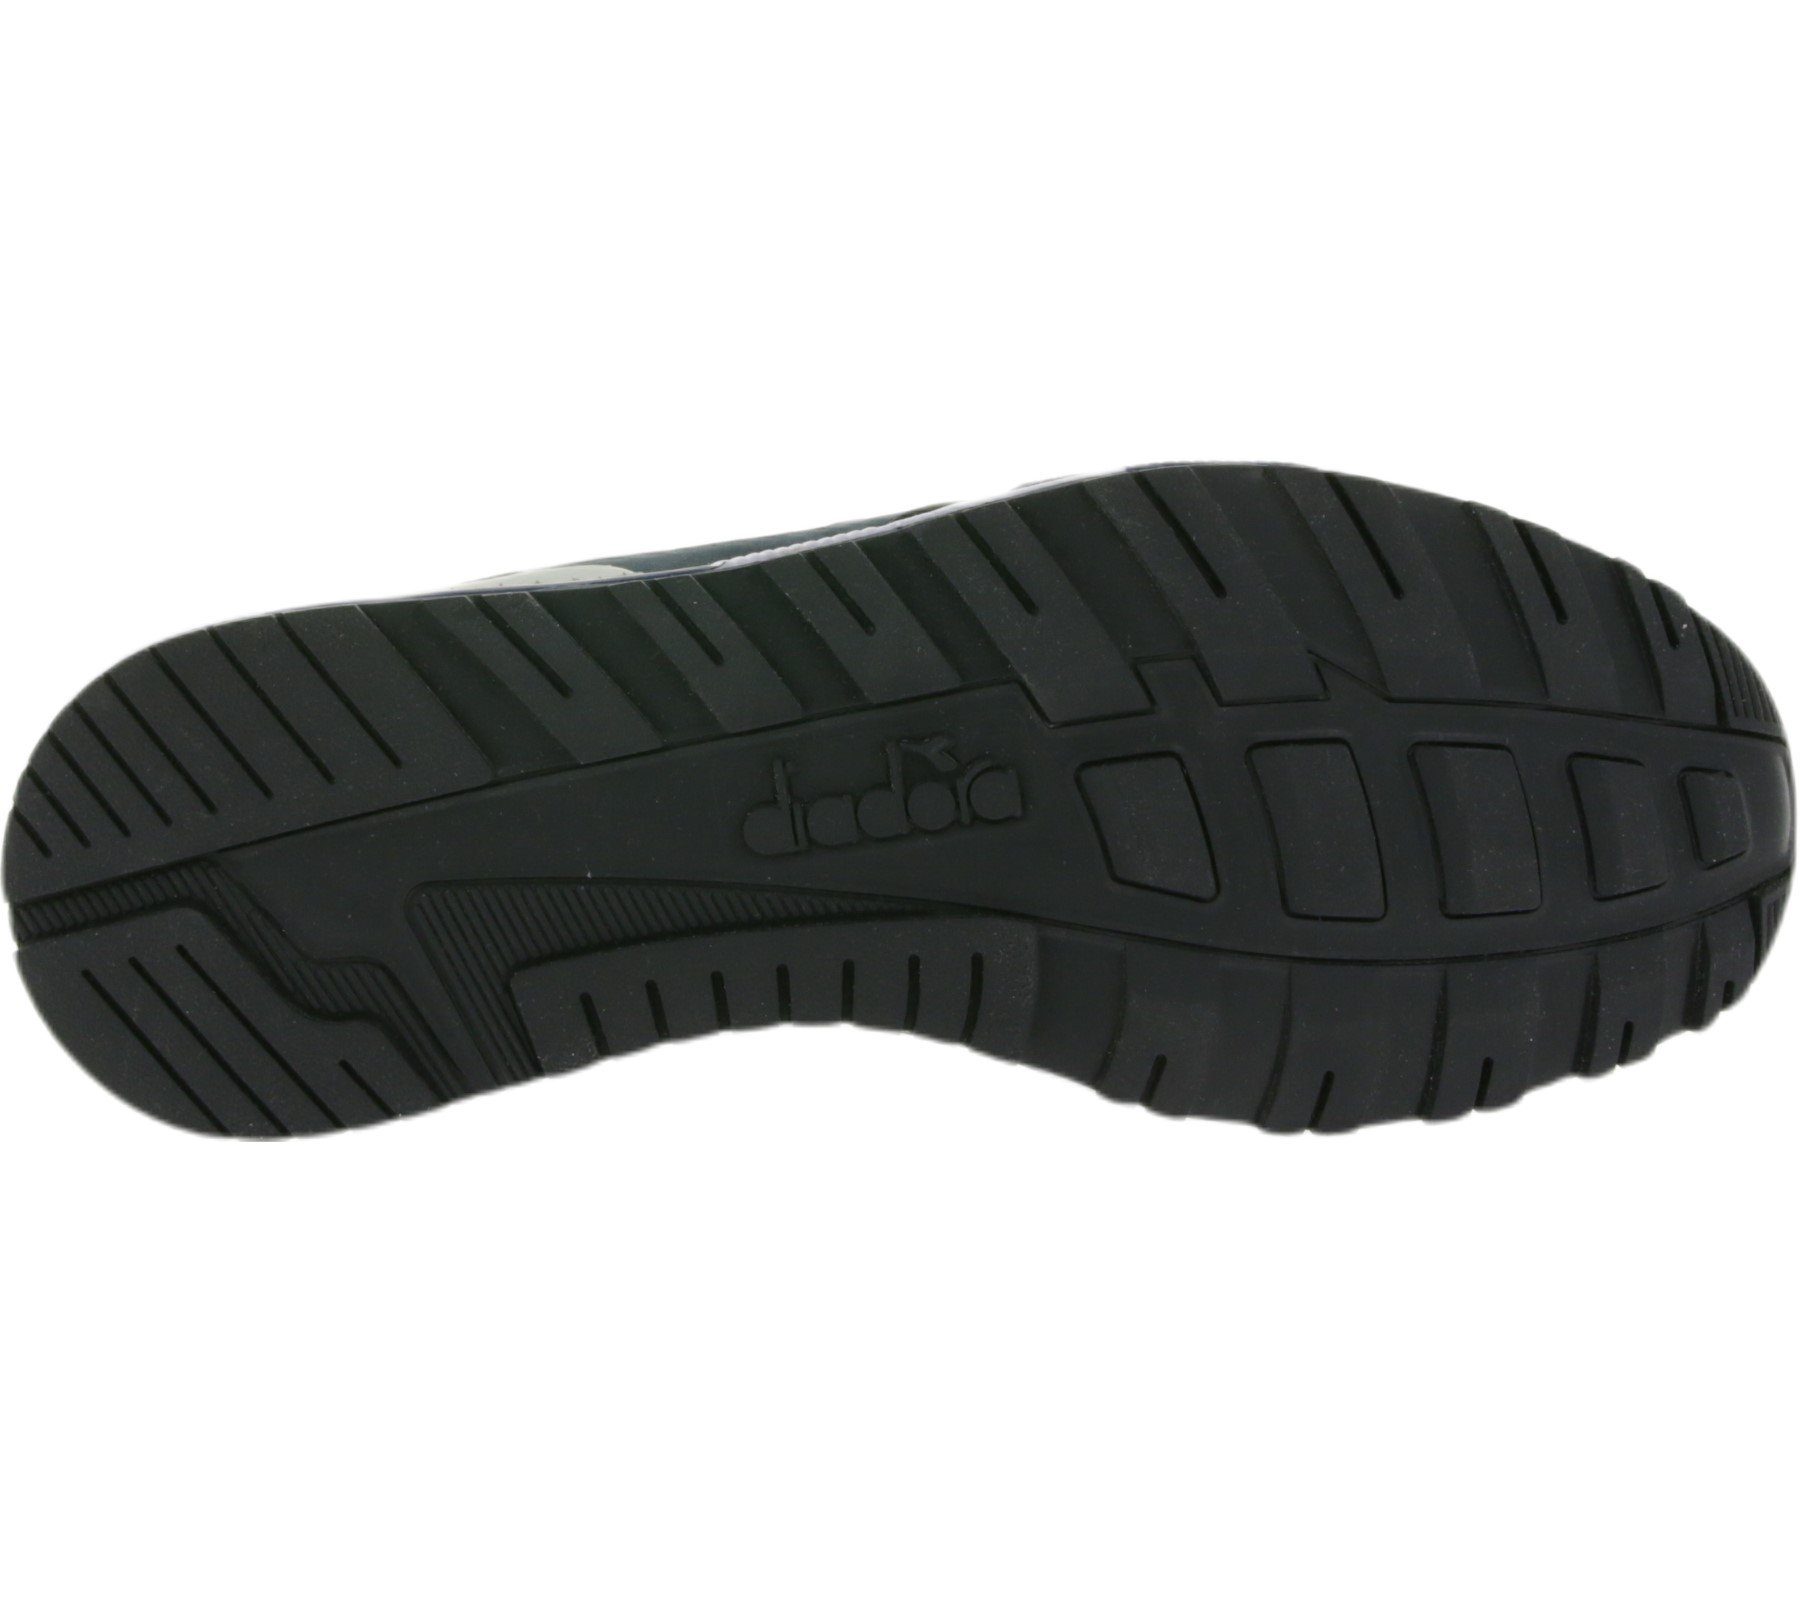 Blau/Grau Diadora Italy 201.177990.75067 diadora N9000 Made Schuhe Turnschuhe Damen Low Top Sneaker Heritage Sneaker in